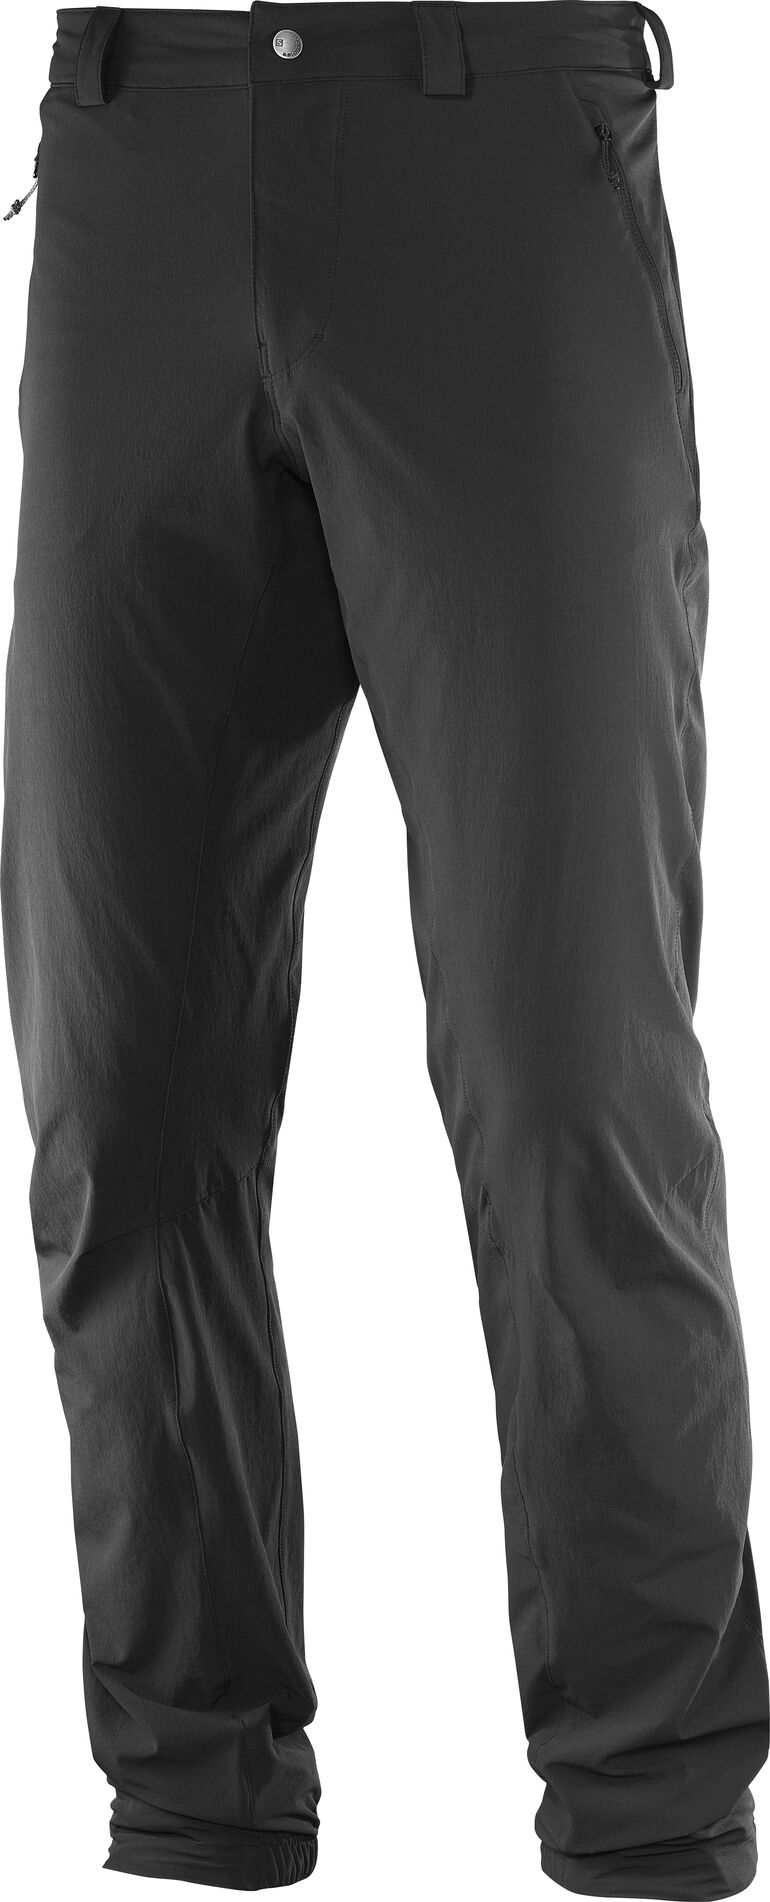 heden Bemiddelen stapel Salomon - Wayfarer Incline Pant M - Trekking trousers - Men's